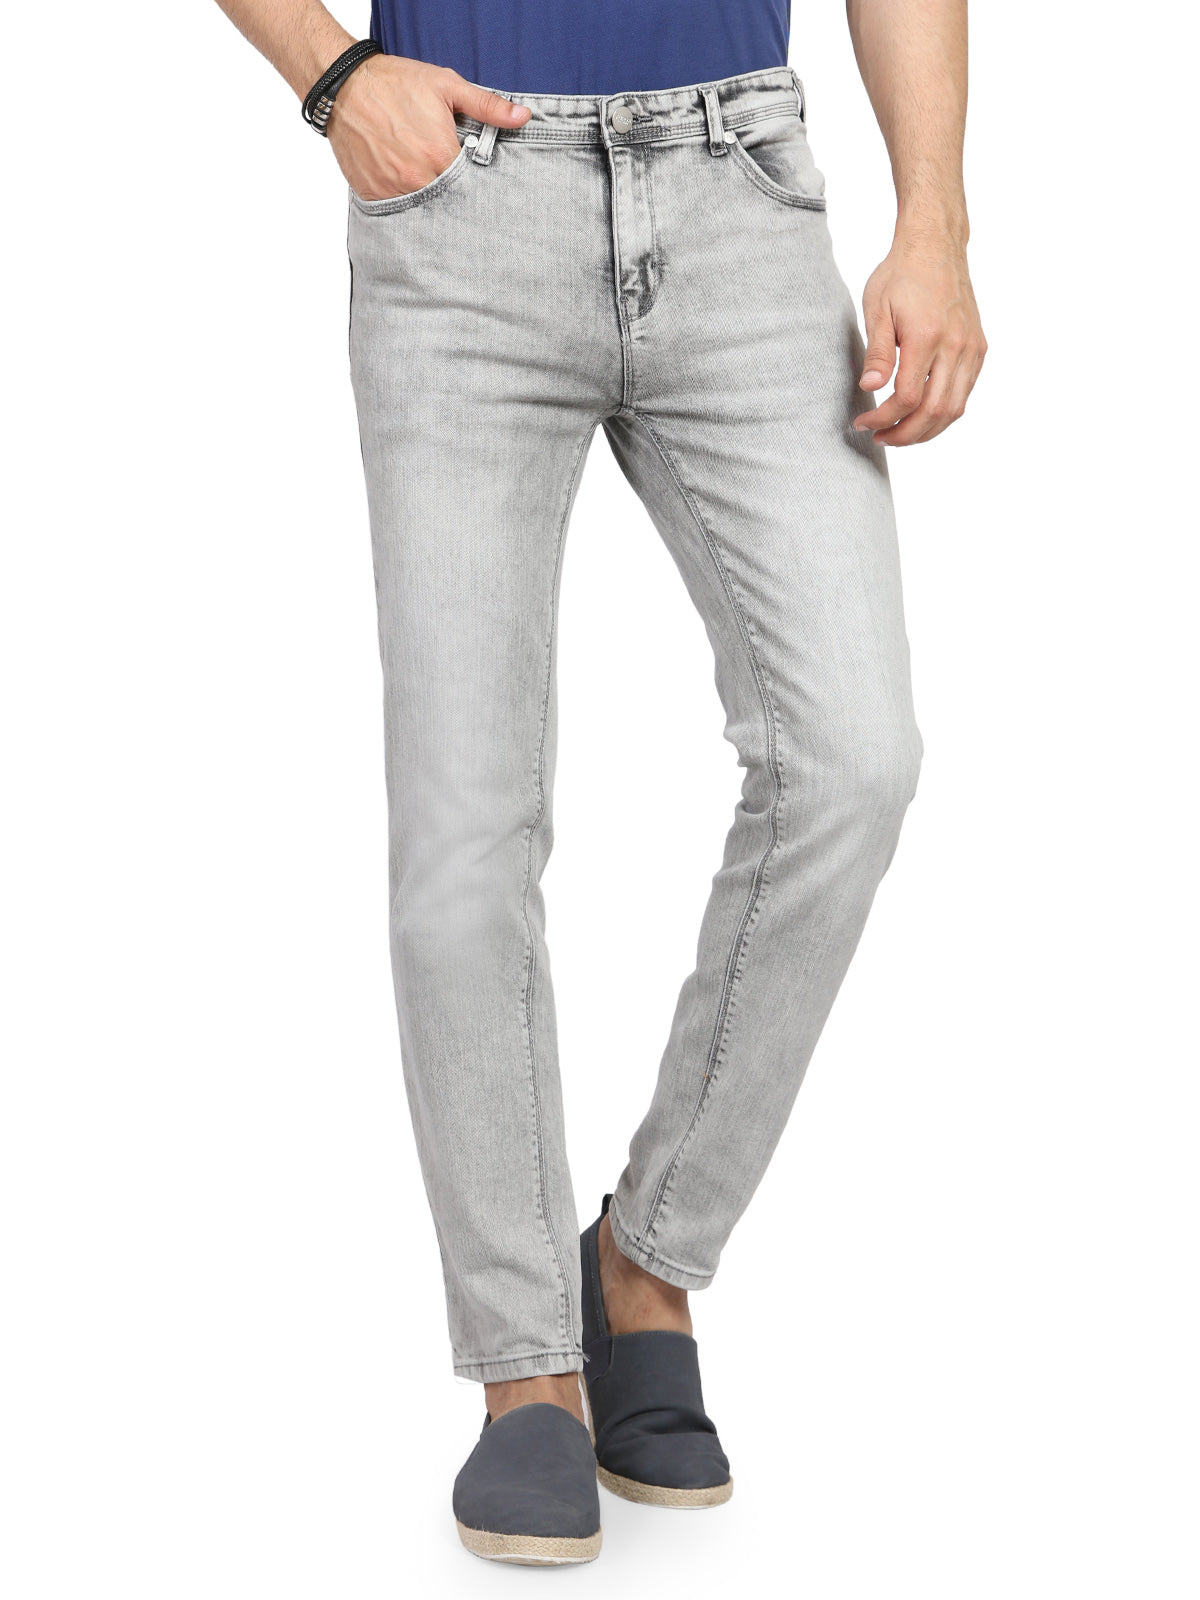 Men's Ash Grey Denim Jeans - FMBP19-093